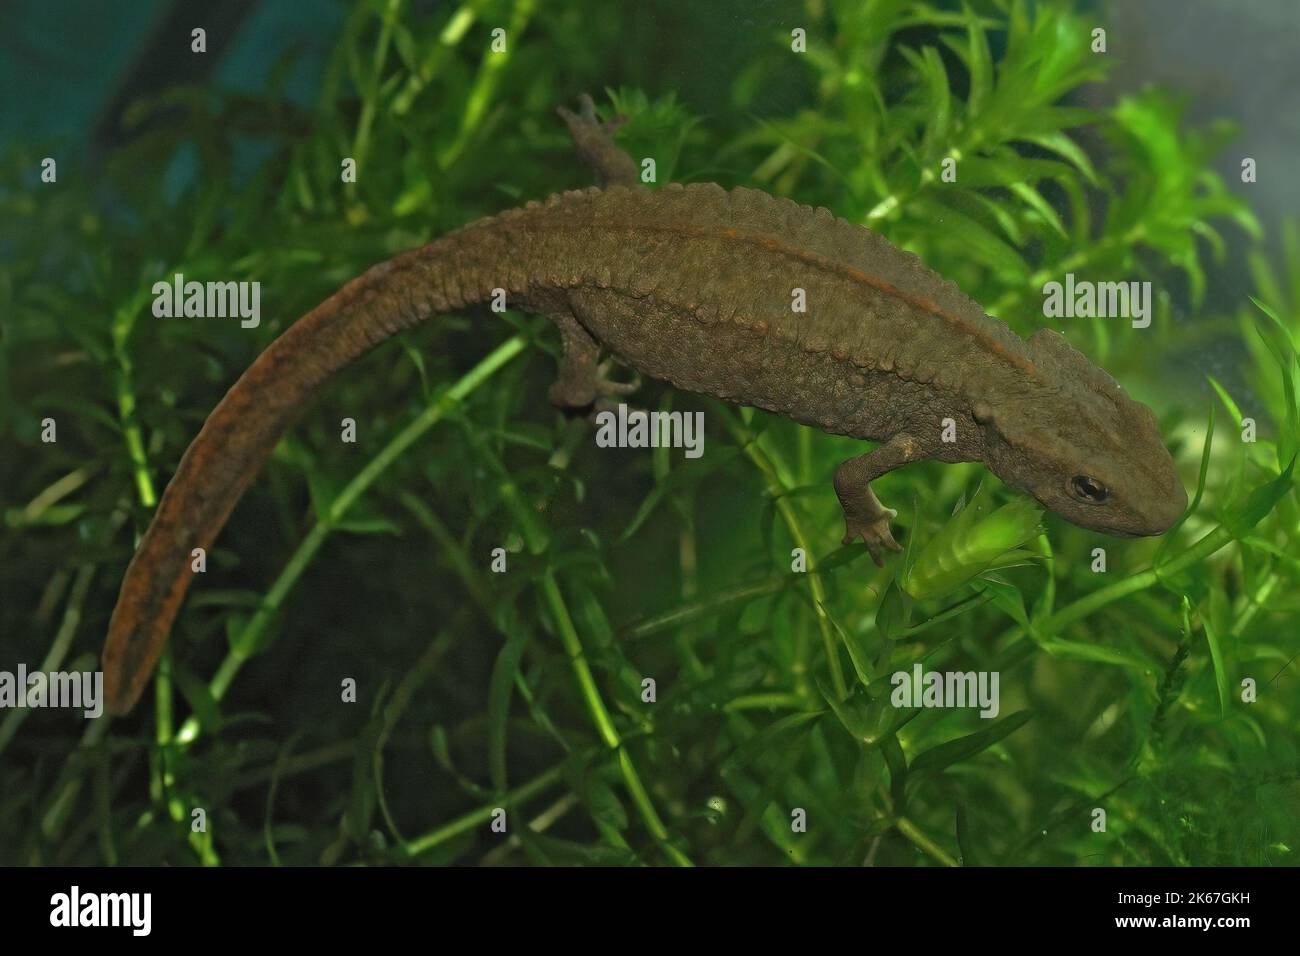 Closeup on a gravid female Hong Kong Warty newt, Paramesotriton hongkongensis in an aquarium in the pet-trade Stock Photo